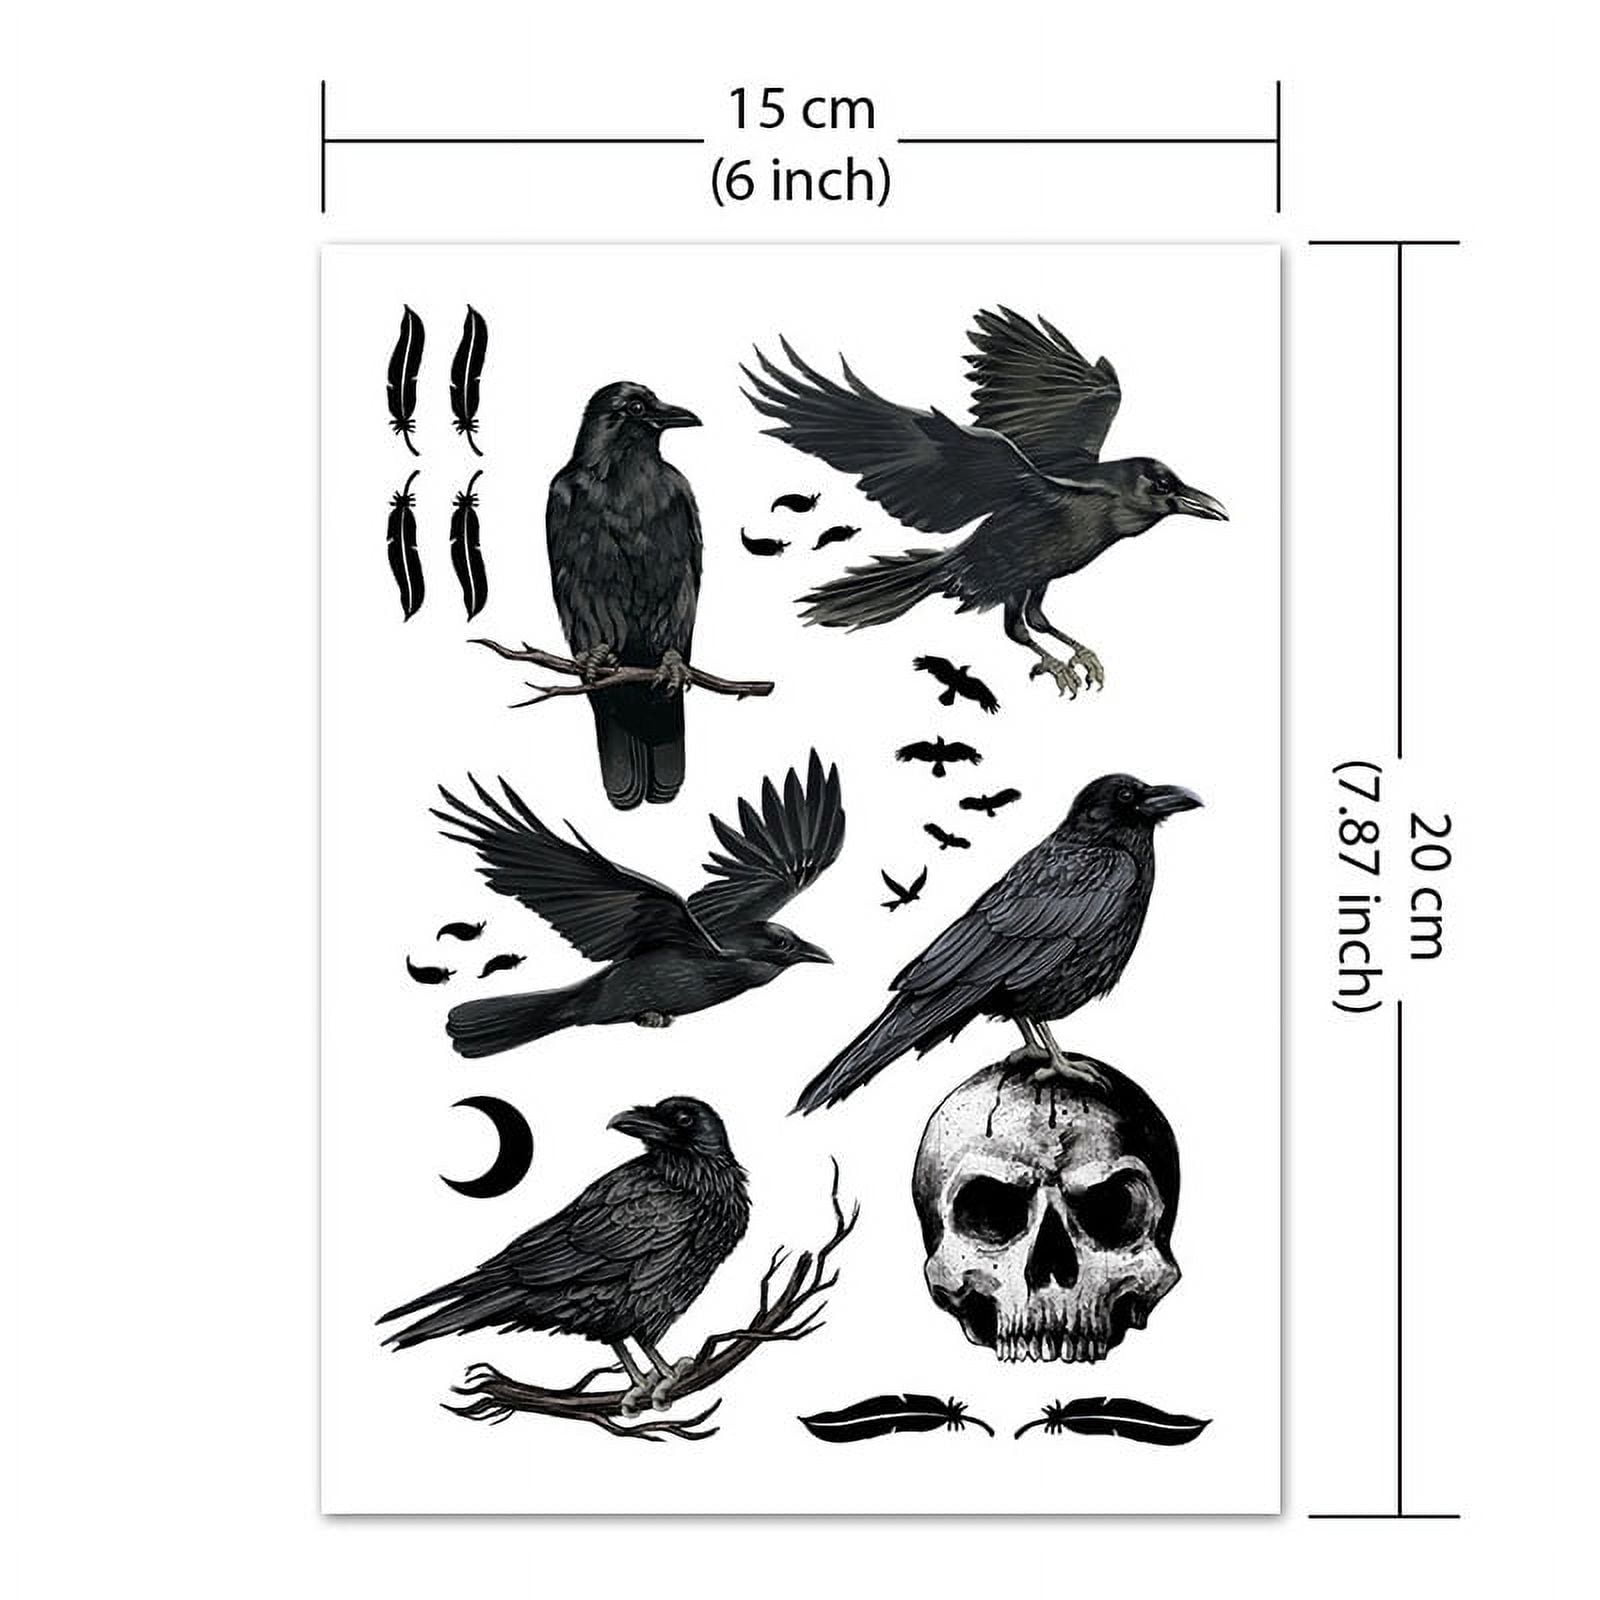 Crow Tattoo 2 Demons - Tattoo Ideas and Designs | Tattoos.ai